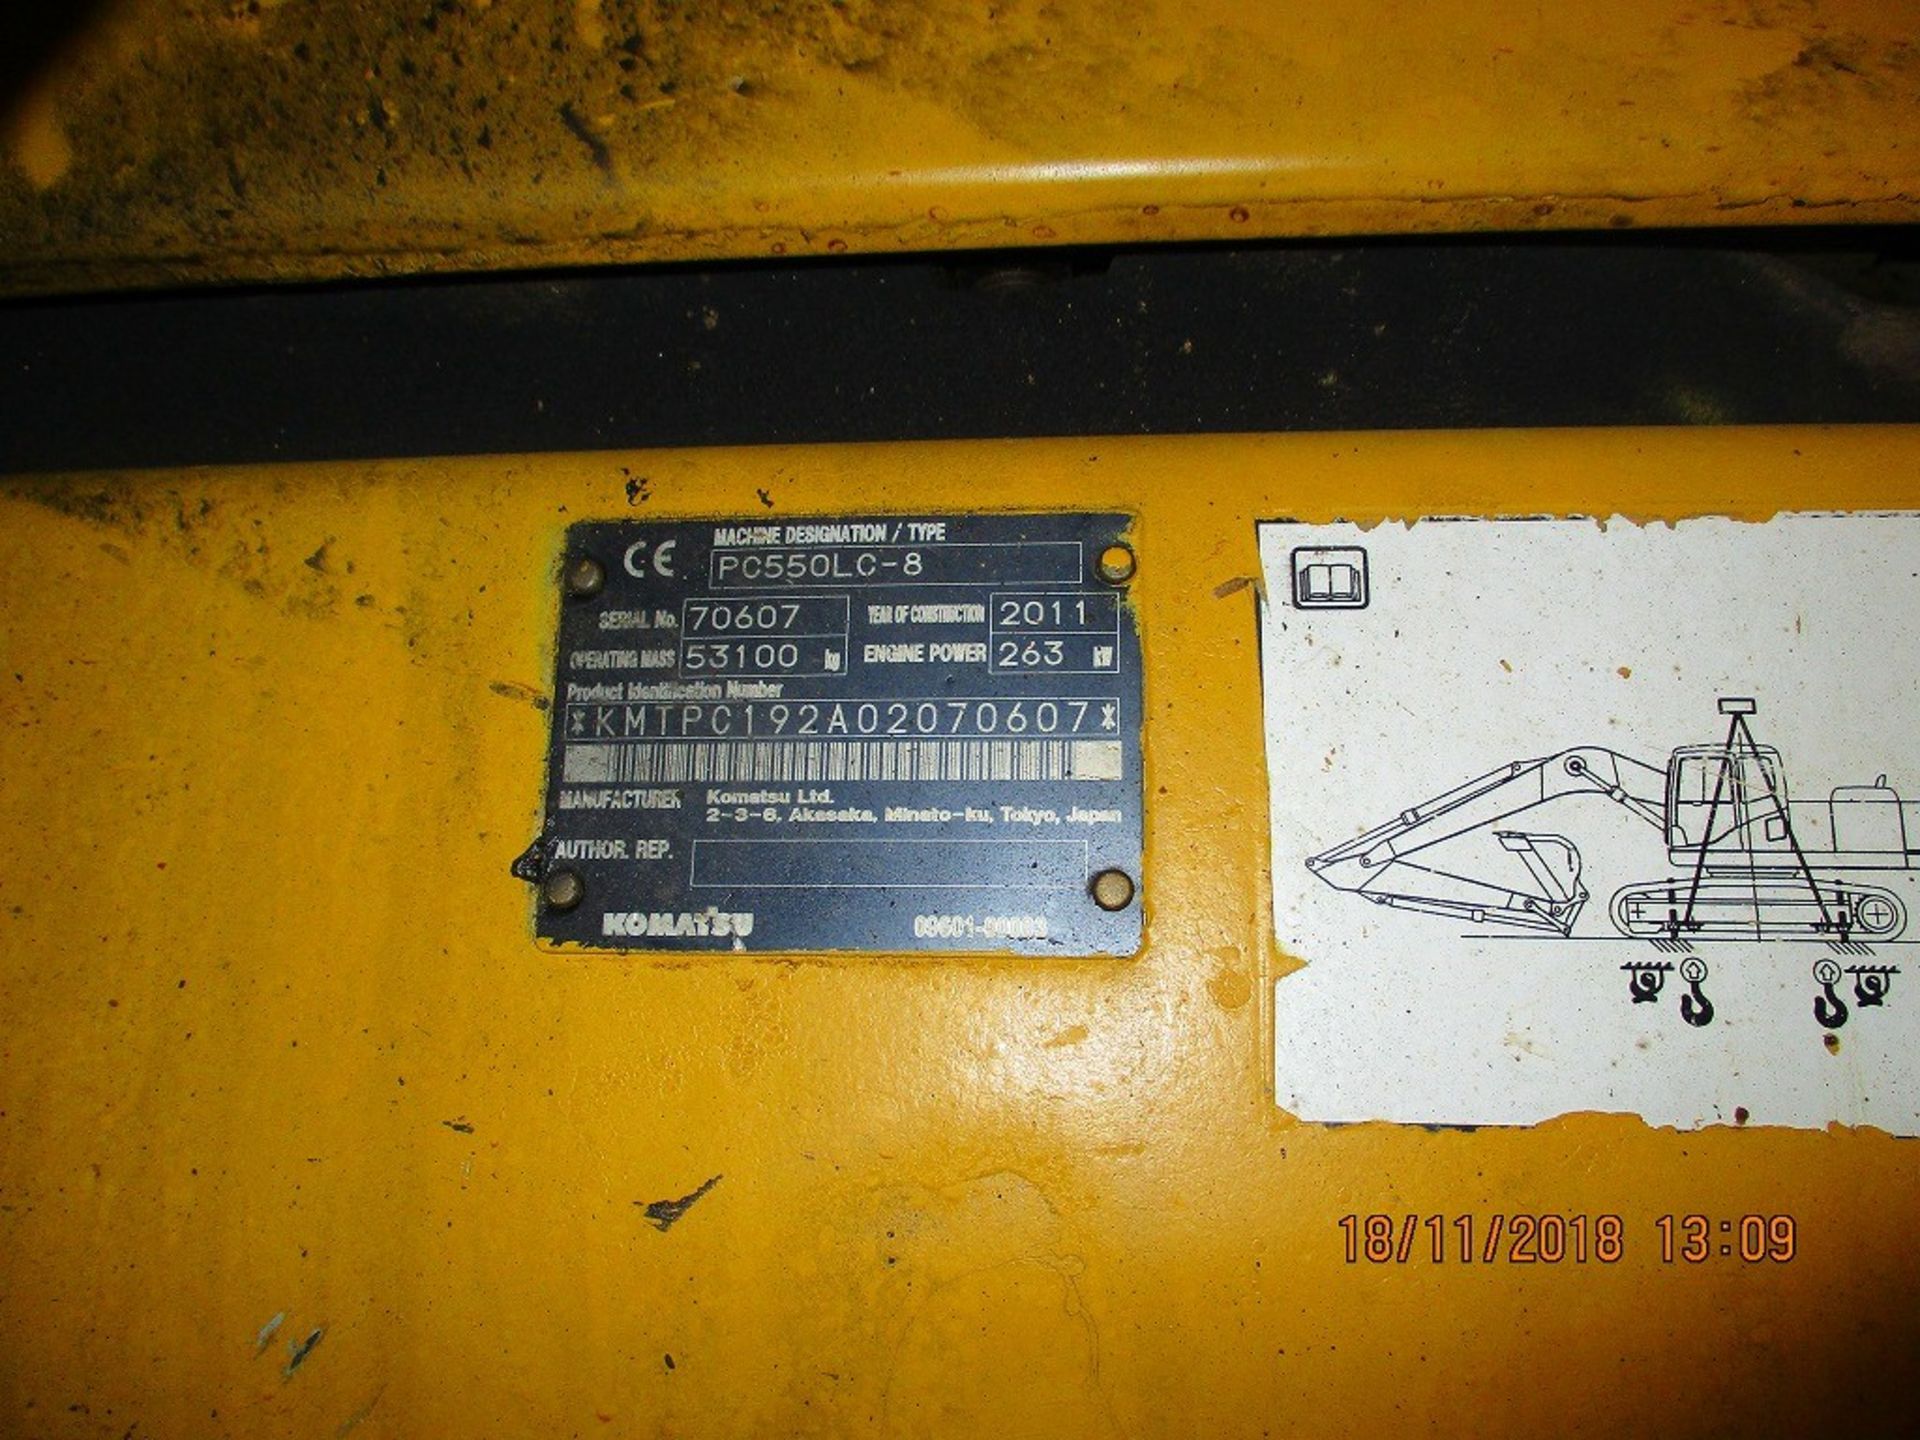 Komatsu PC550LC-8 Tracked Excavator - Image 8 of 10